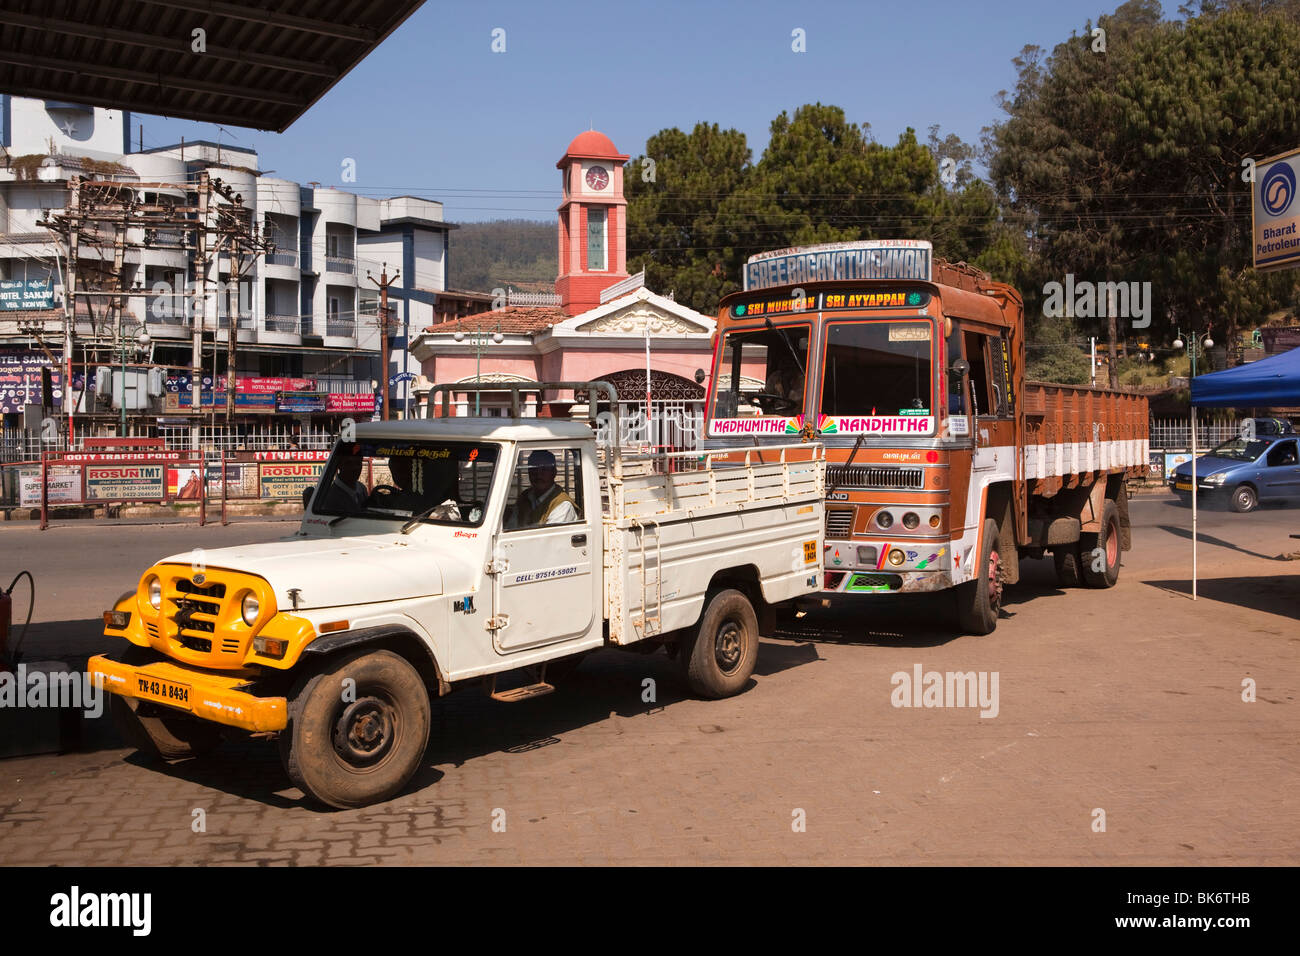 India, Tamil Nadu, Udhagamandalam (Ooty), Mahindra jeep and Ashok Leyland lorry in petrol station queue Stock Photo